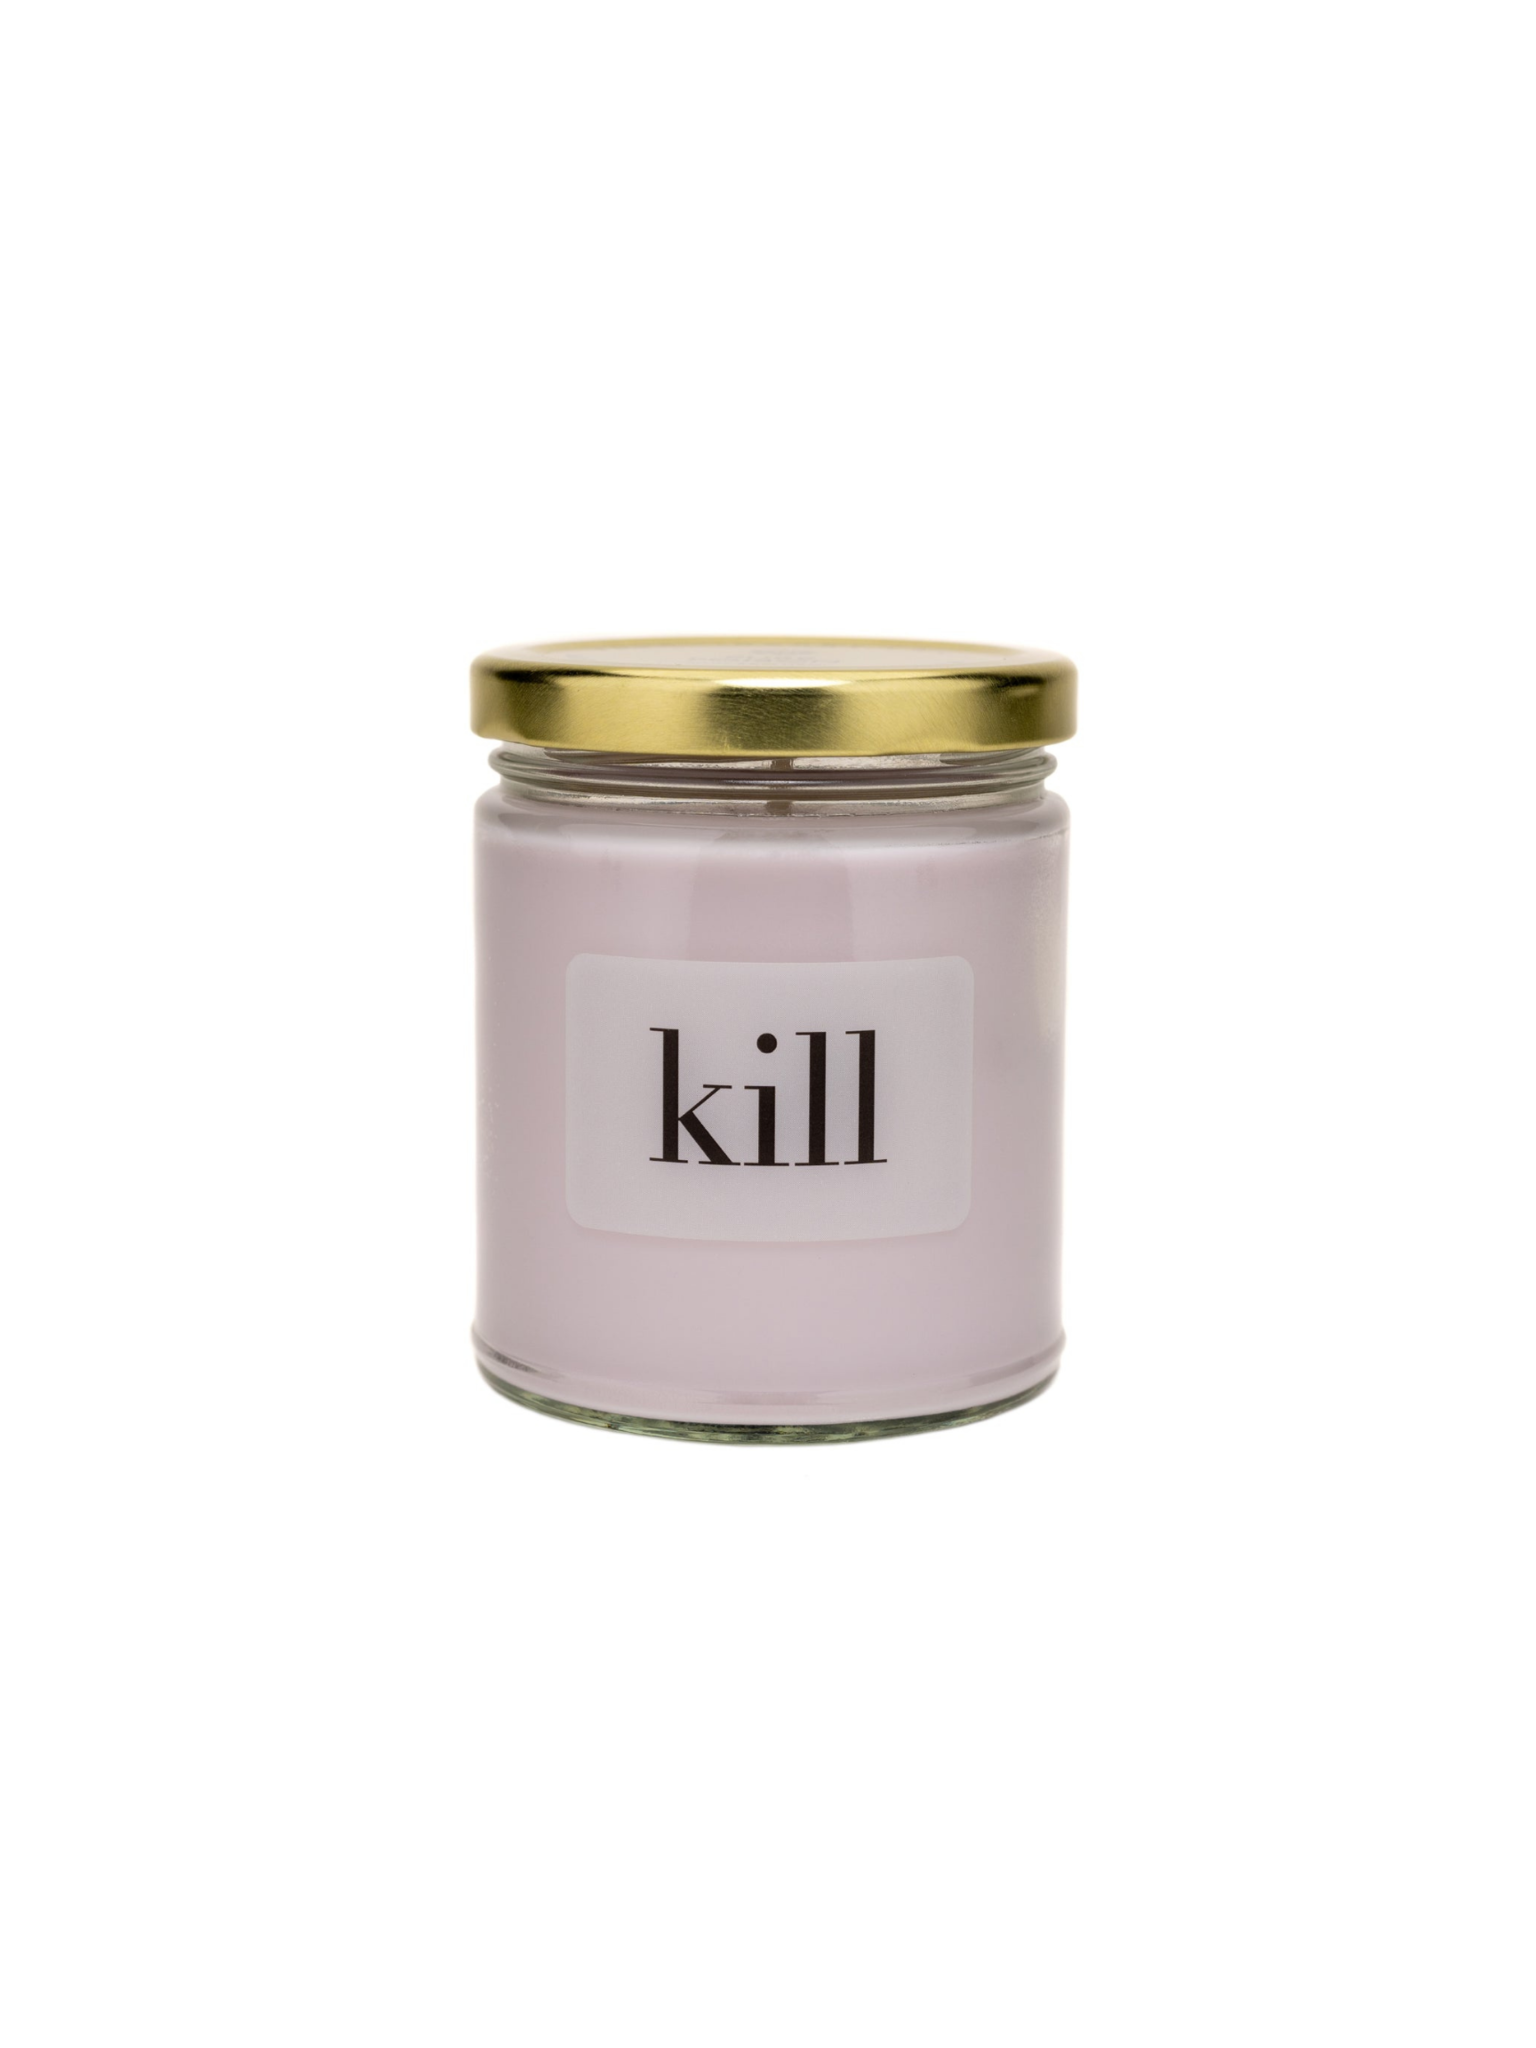 Kill- FMK Candle